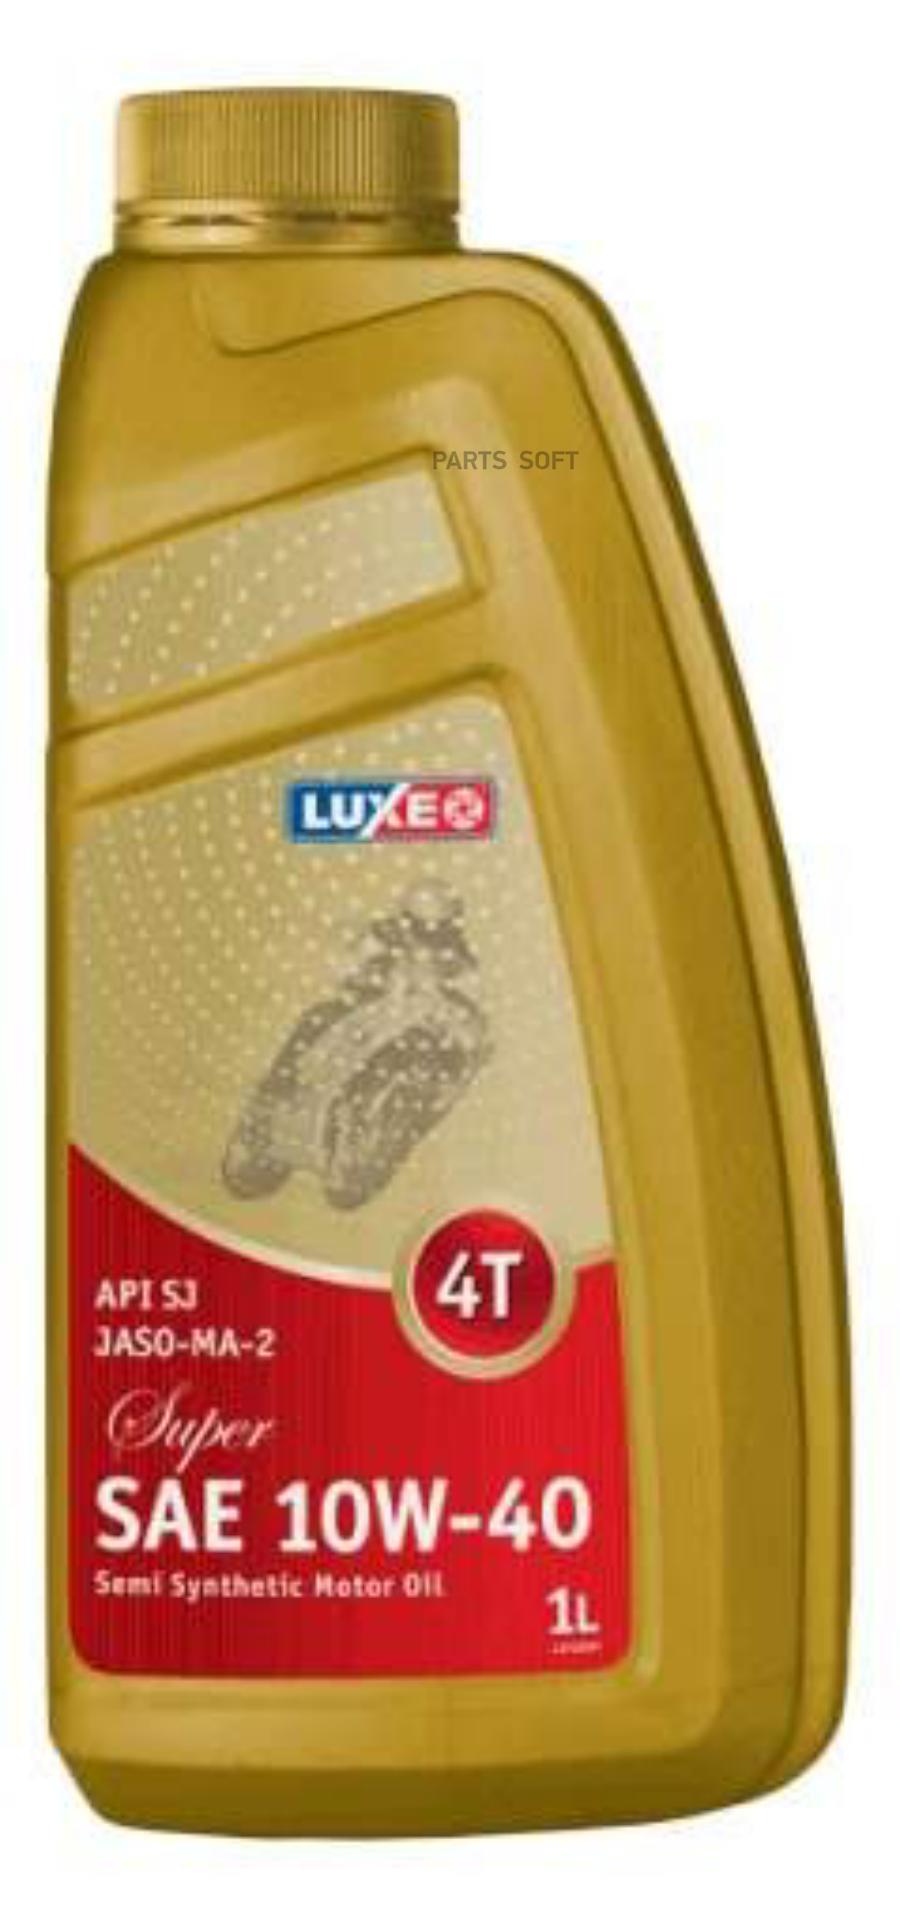 Масло для мототехники LUXE Standard 4T 10w40, полусинтетическое, API SG, JASO MA, 4-тактное, 1л, арт. 123